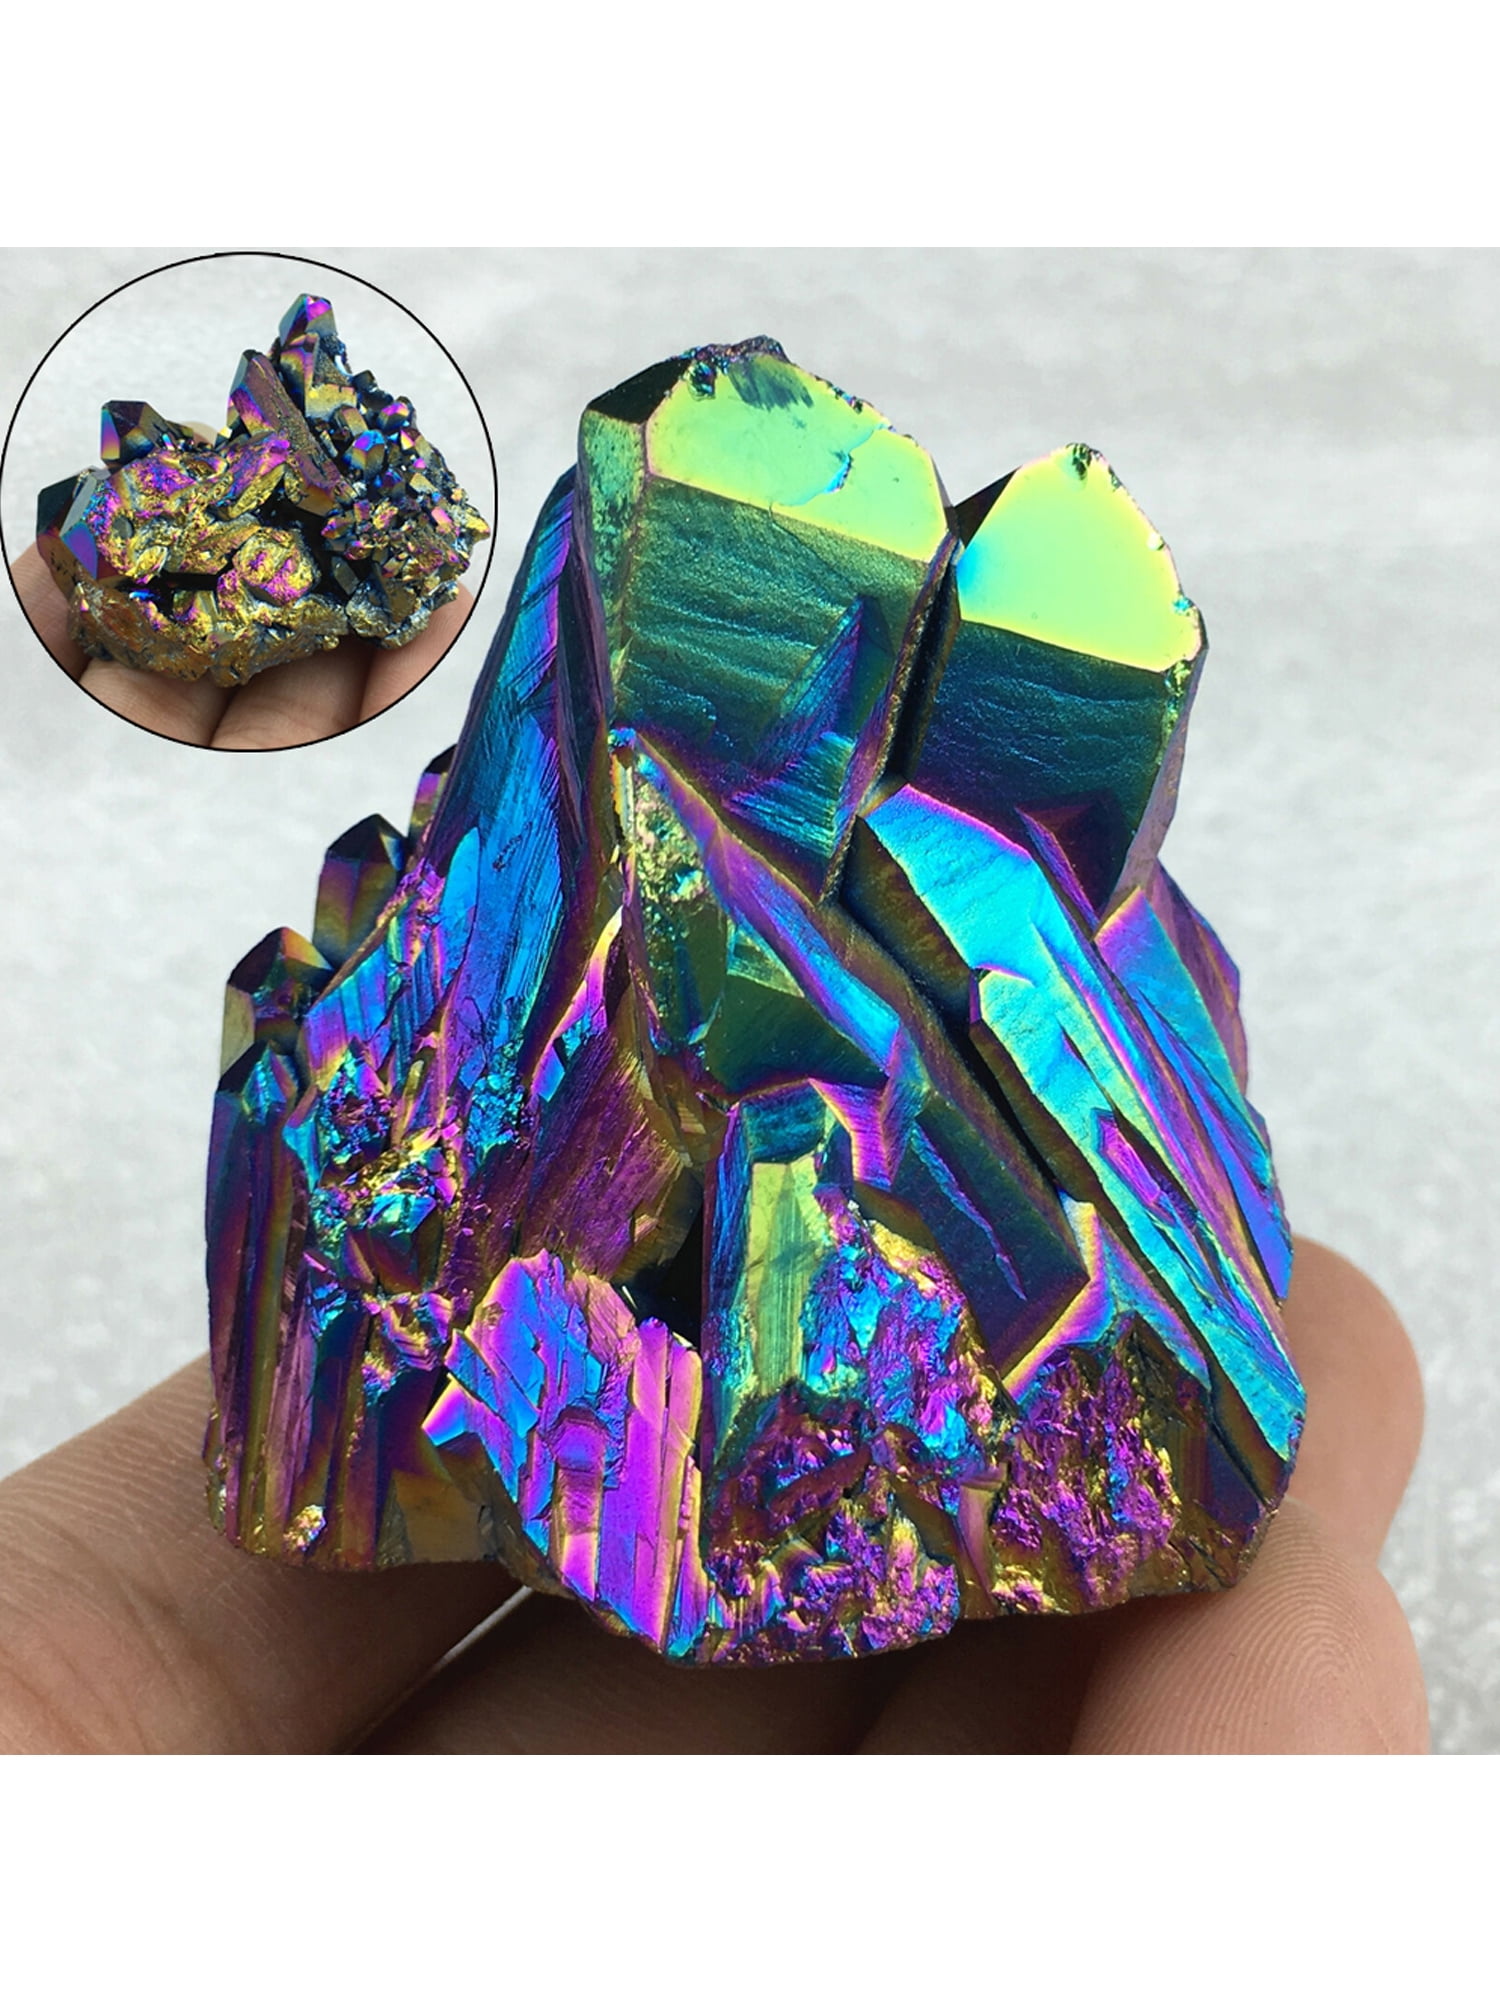 Natural Quartz Crystal Rainbow Titanium Cluster VUG Mineral Specimen Healing NEW 